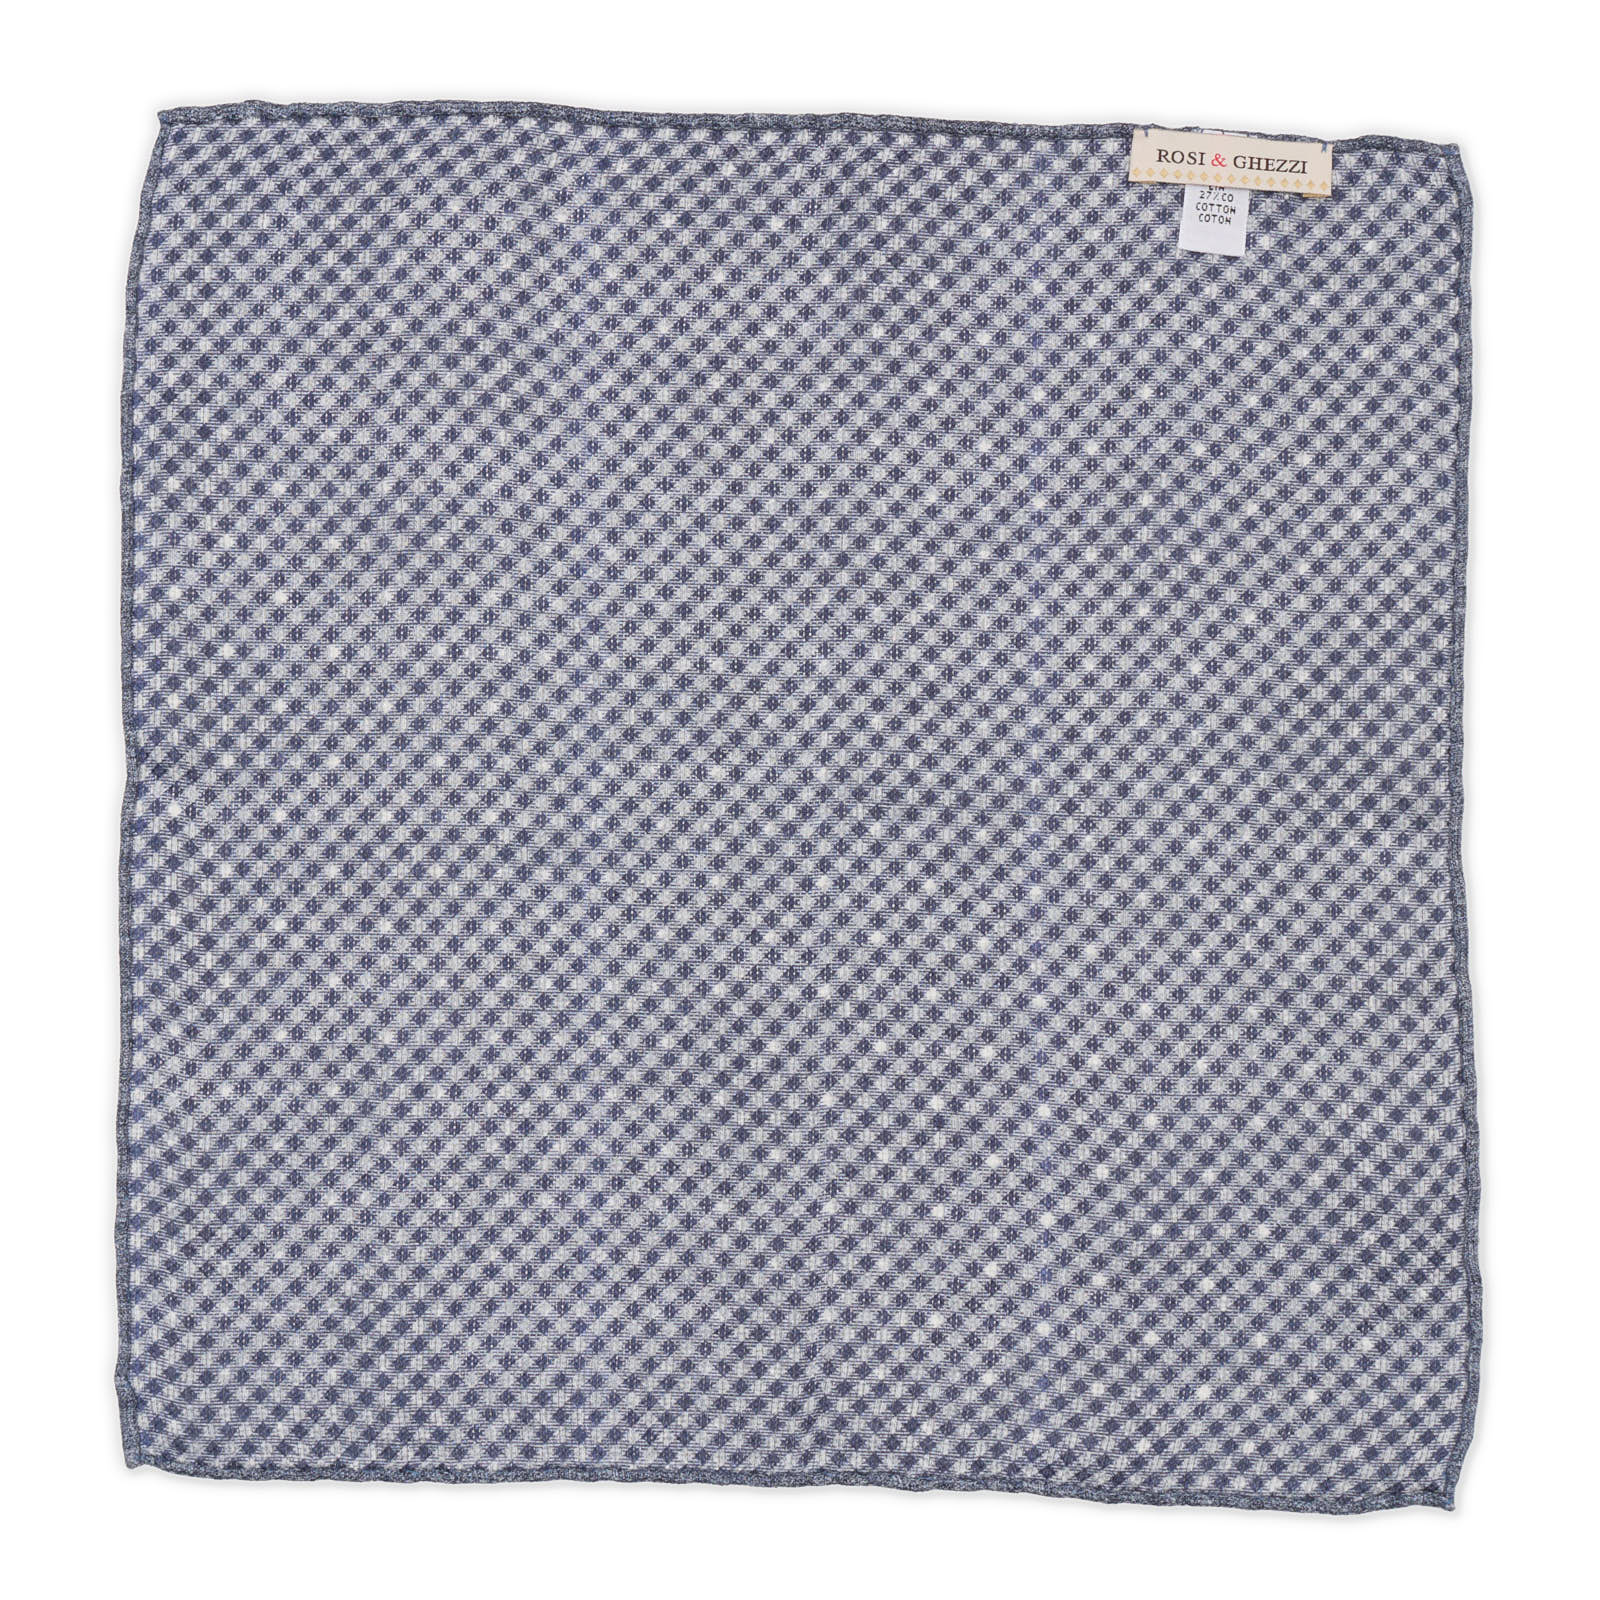 ROSI Handmade Royal Blue Dot-Plaids Linen-Cotton Pocket Square NEW 31cm x 30cm